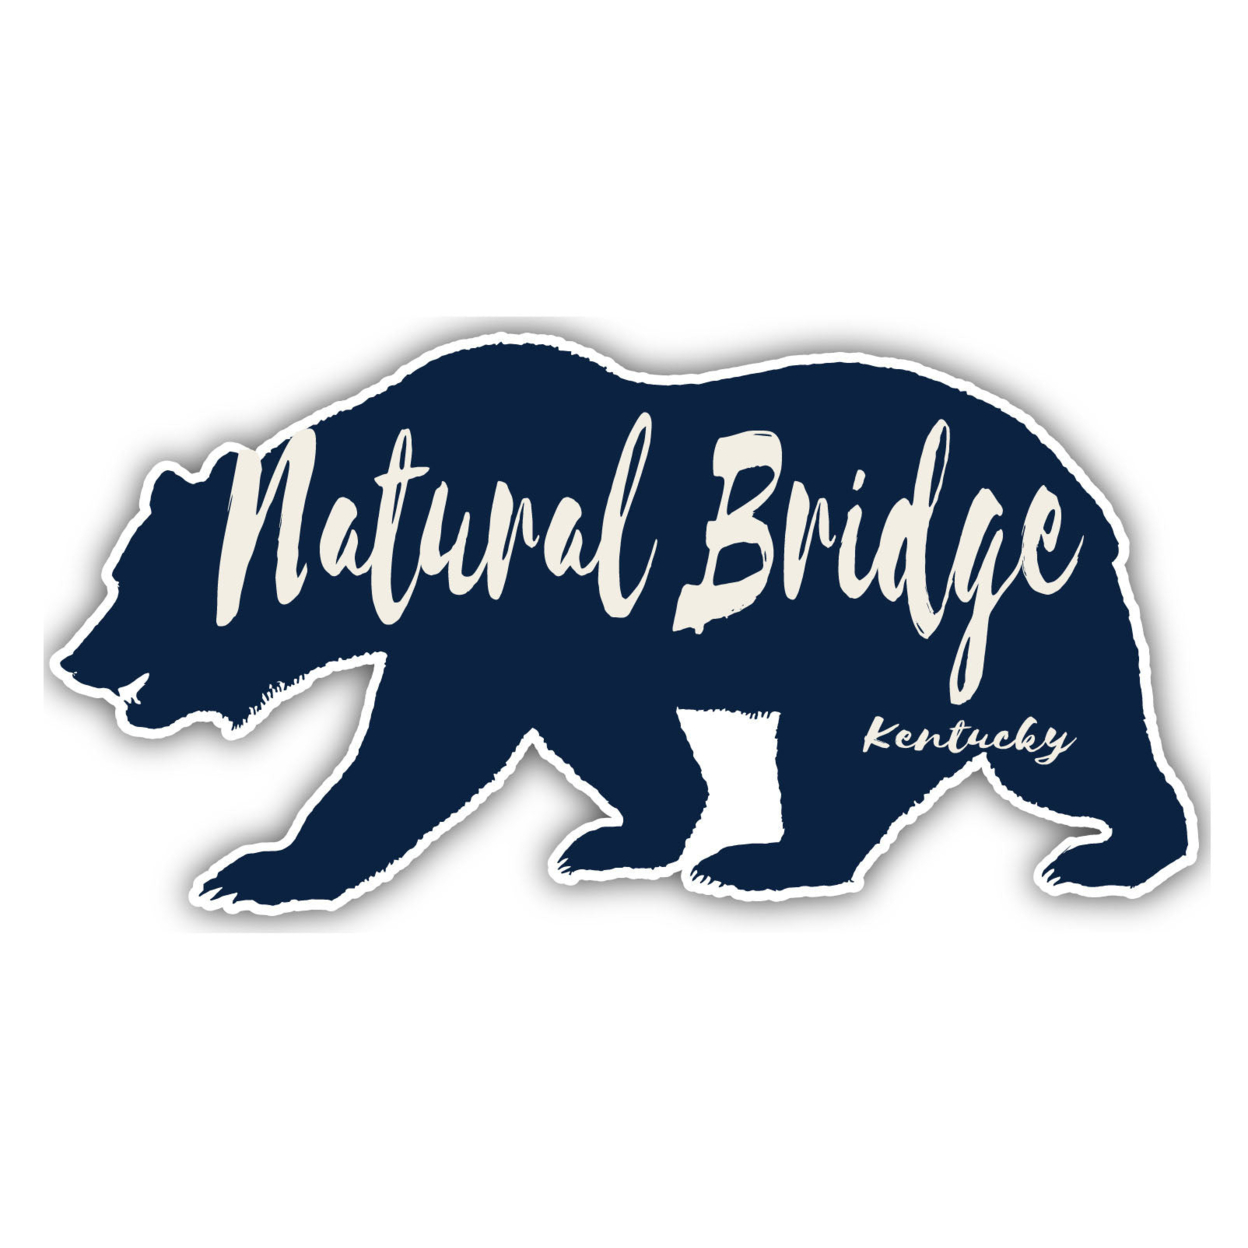 Natural Bridge Kentucky Souvenir Decorative Stickers (Choose Theme And Size) - Single Unit, 2-Inch, Bear